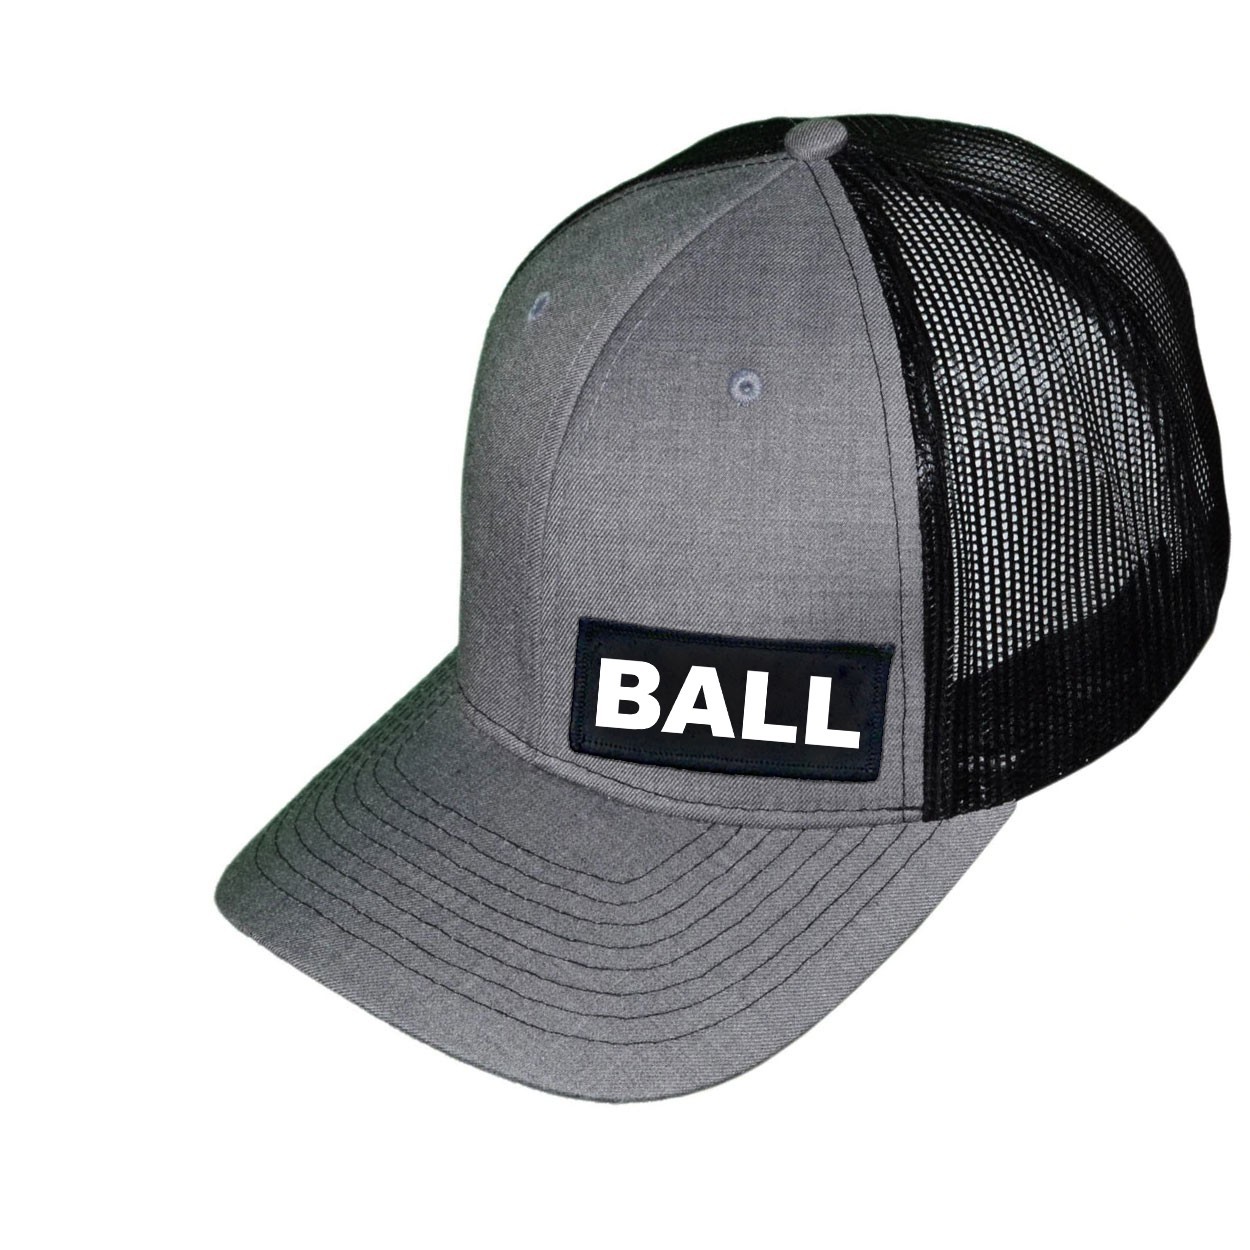 Ball Brand Logo Night Out Woven Patch Snapback Trucker Hat Heather Gray/Black (White Logo)